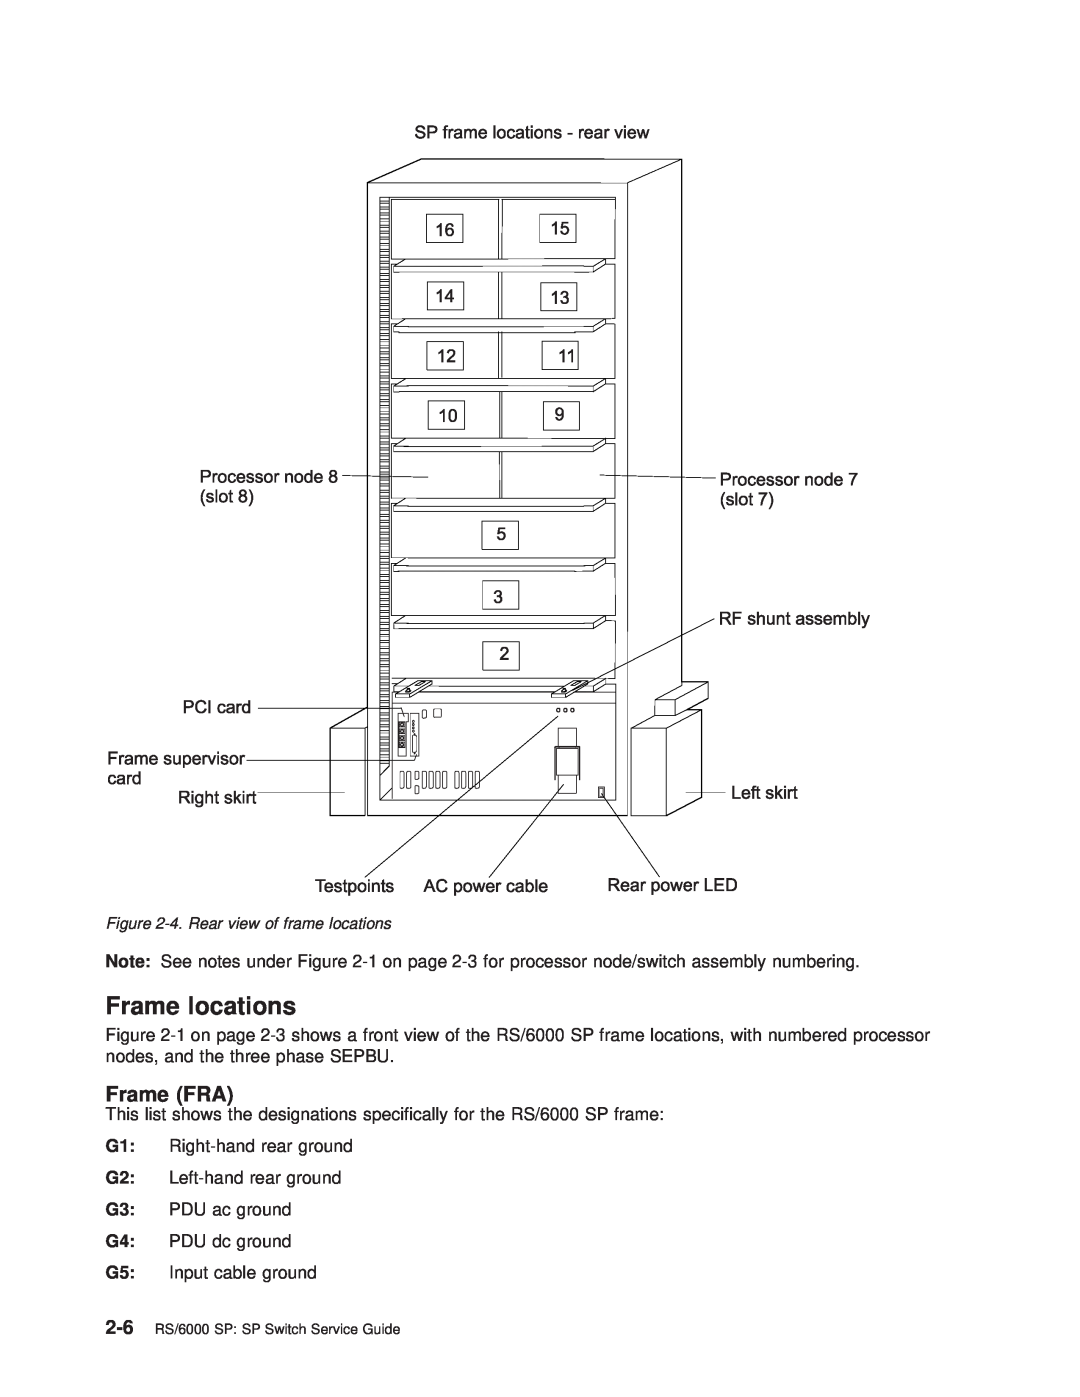 IBM RS/6000 SP manual Frame locations, Frame FRA 